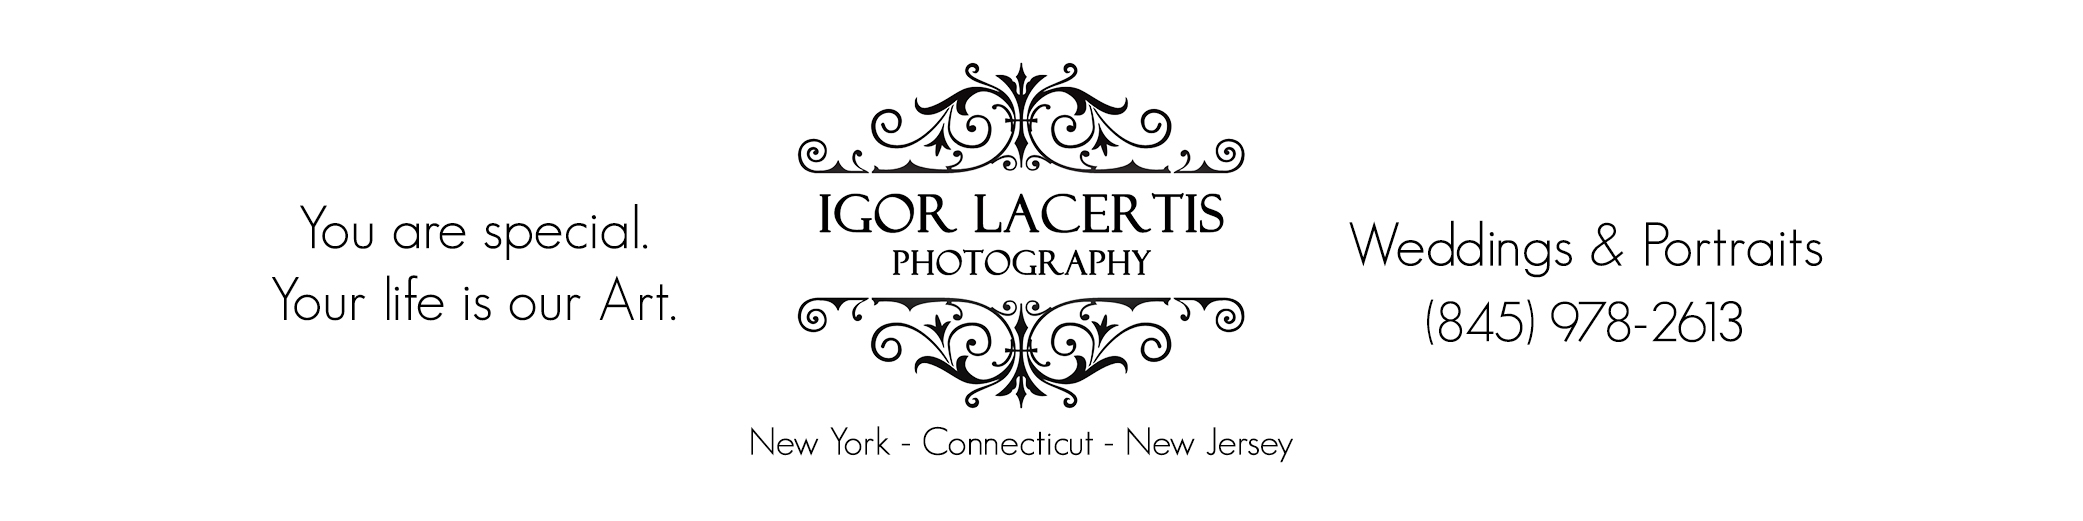 Igor Lacertis Photography